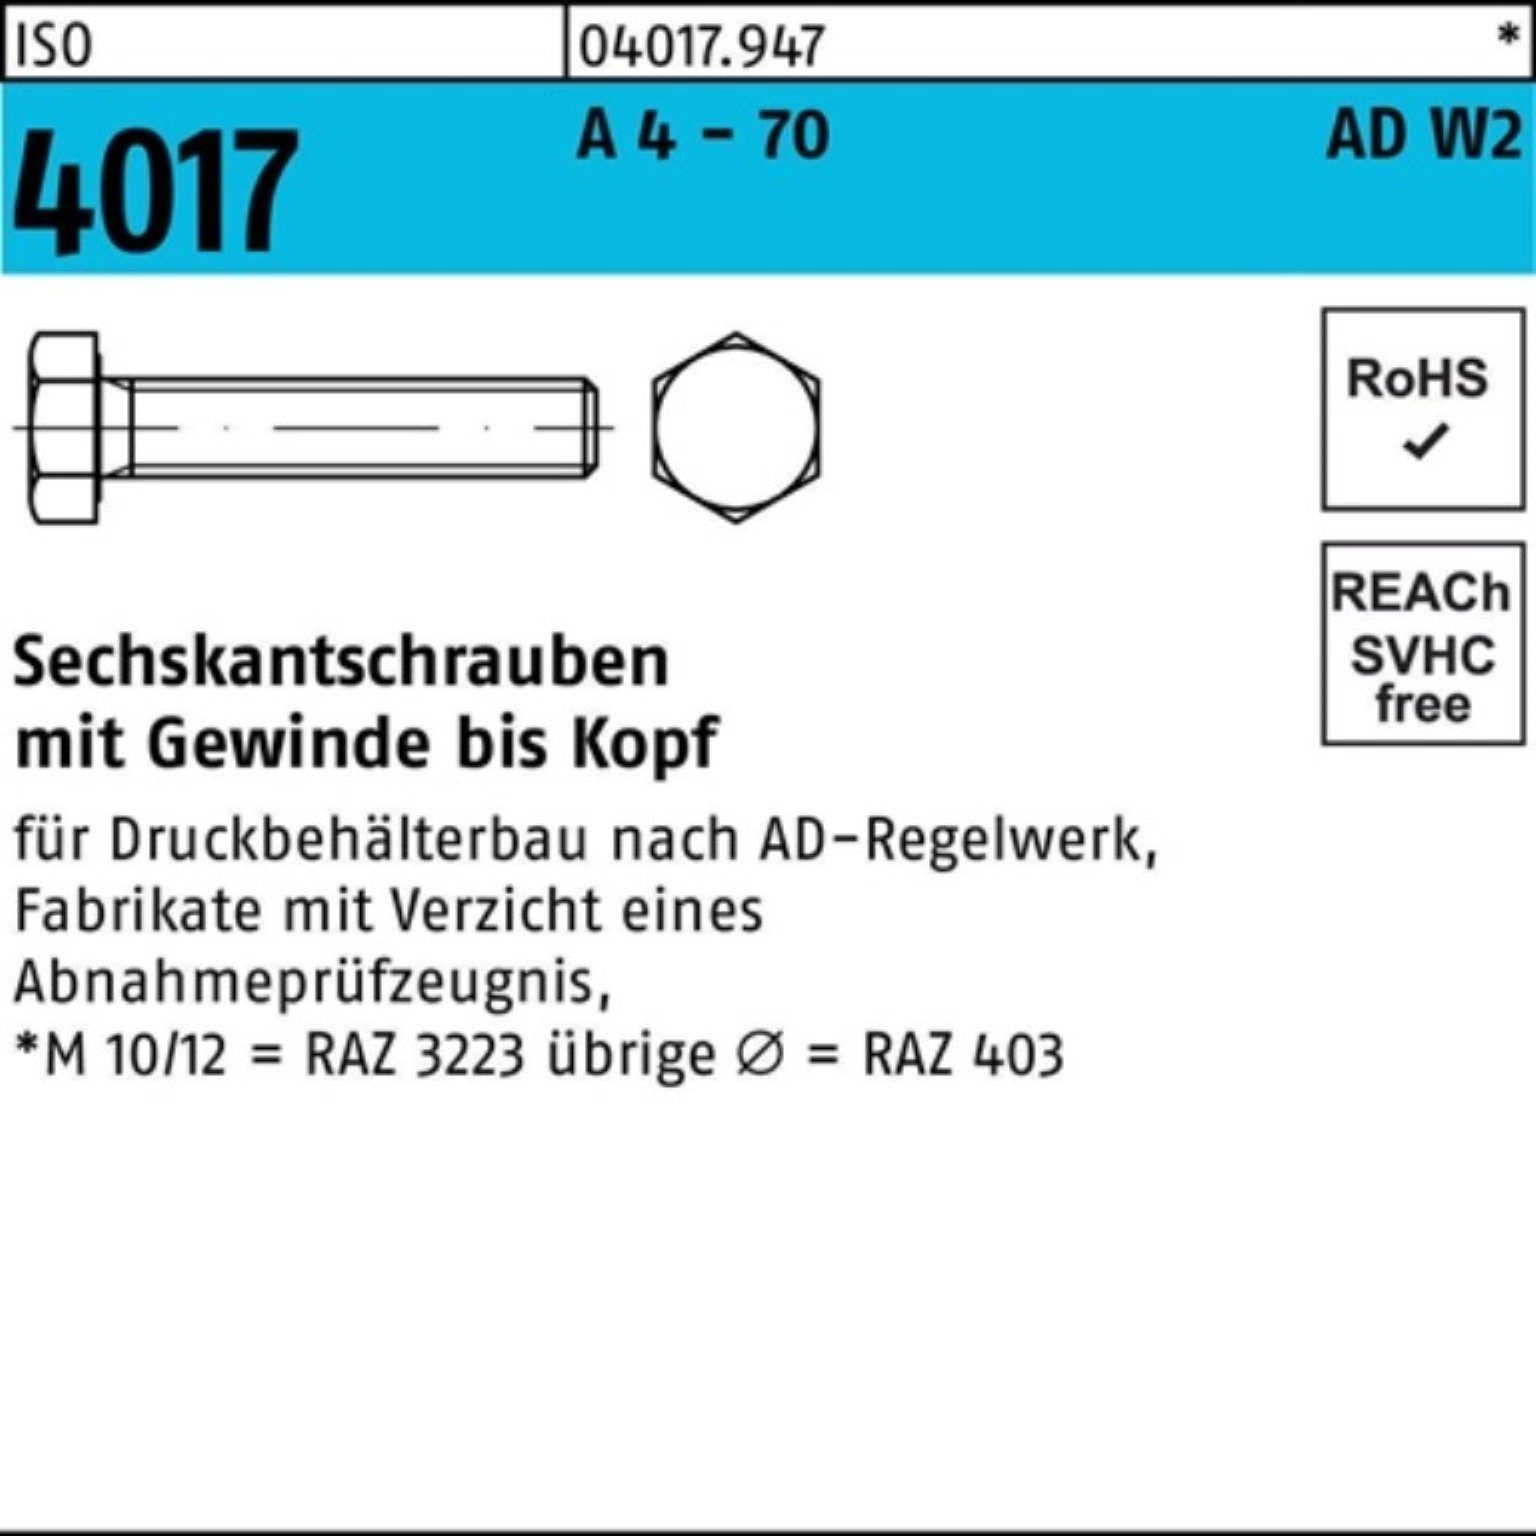 Bufab Sechskantschraube 100er Pack Sechskantschraube ISO 4017 VG M16x 65 A 4 - 70 AD-W2 25 St